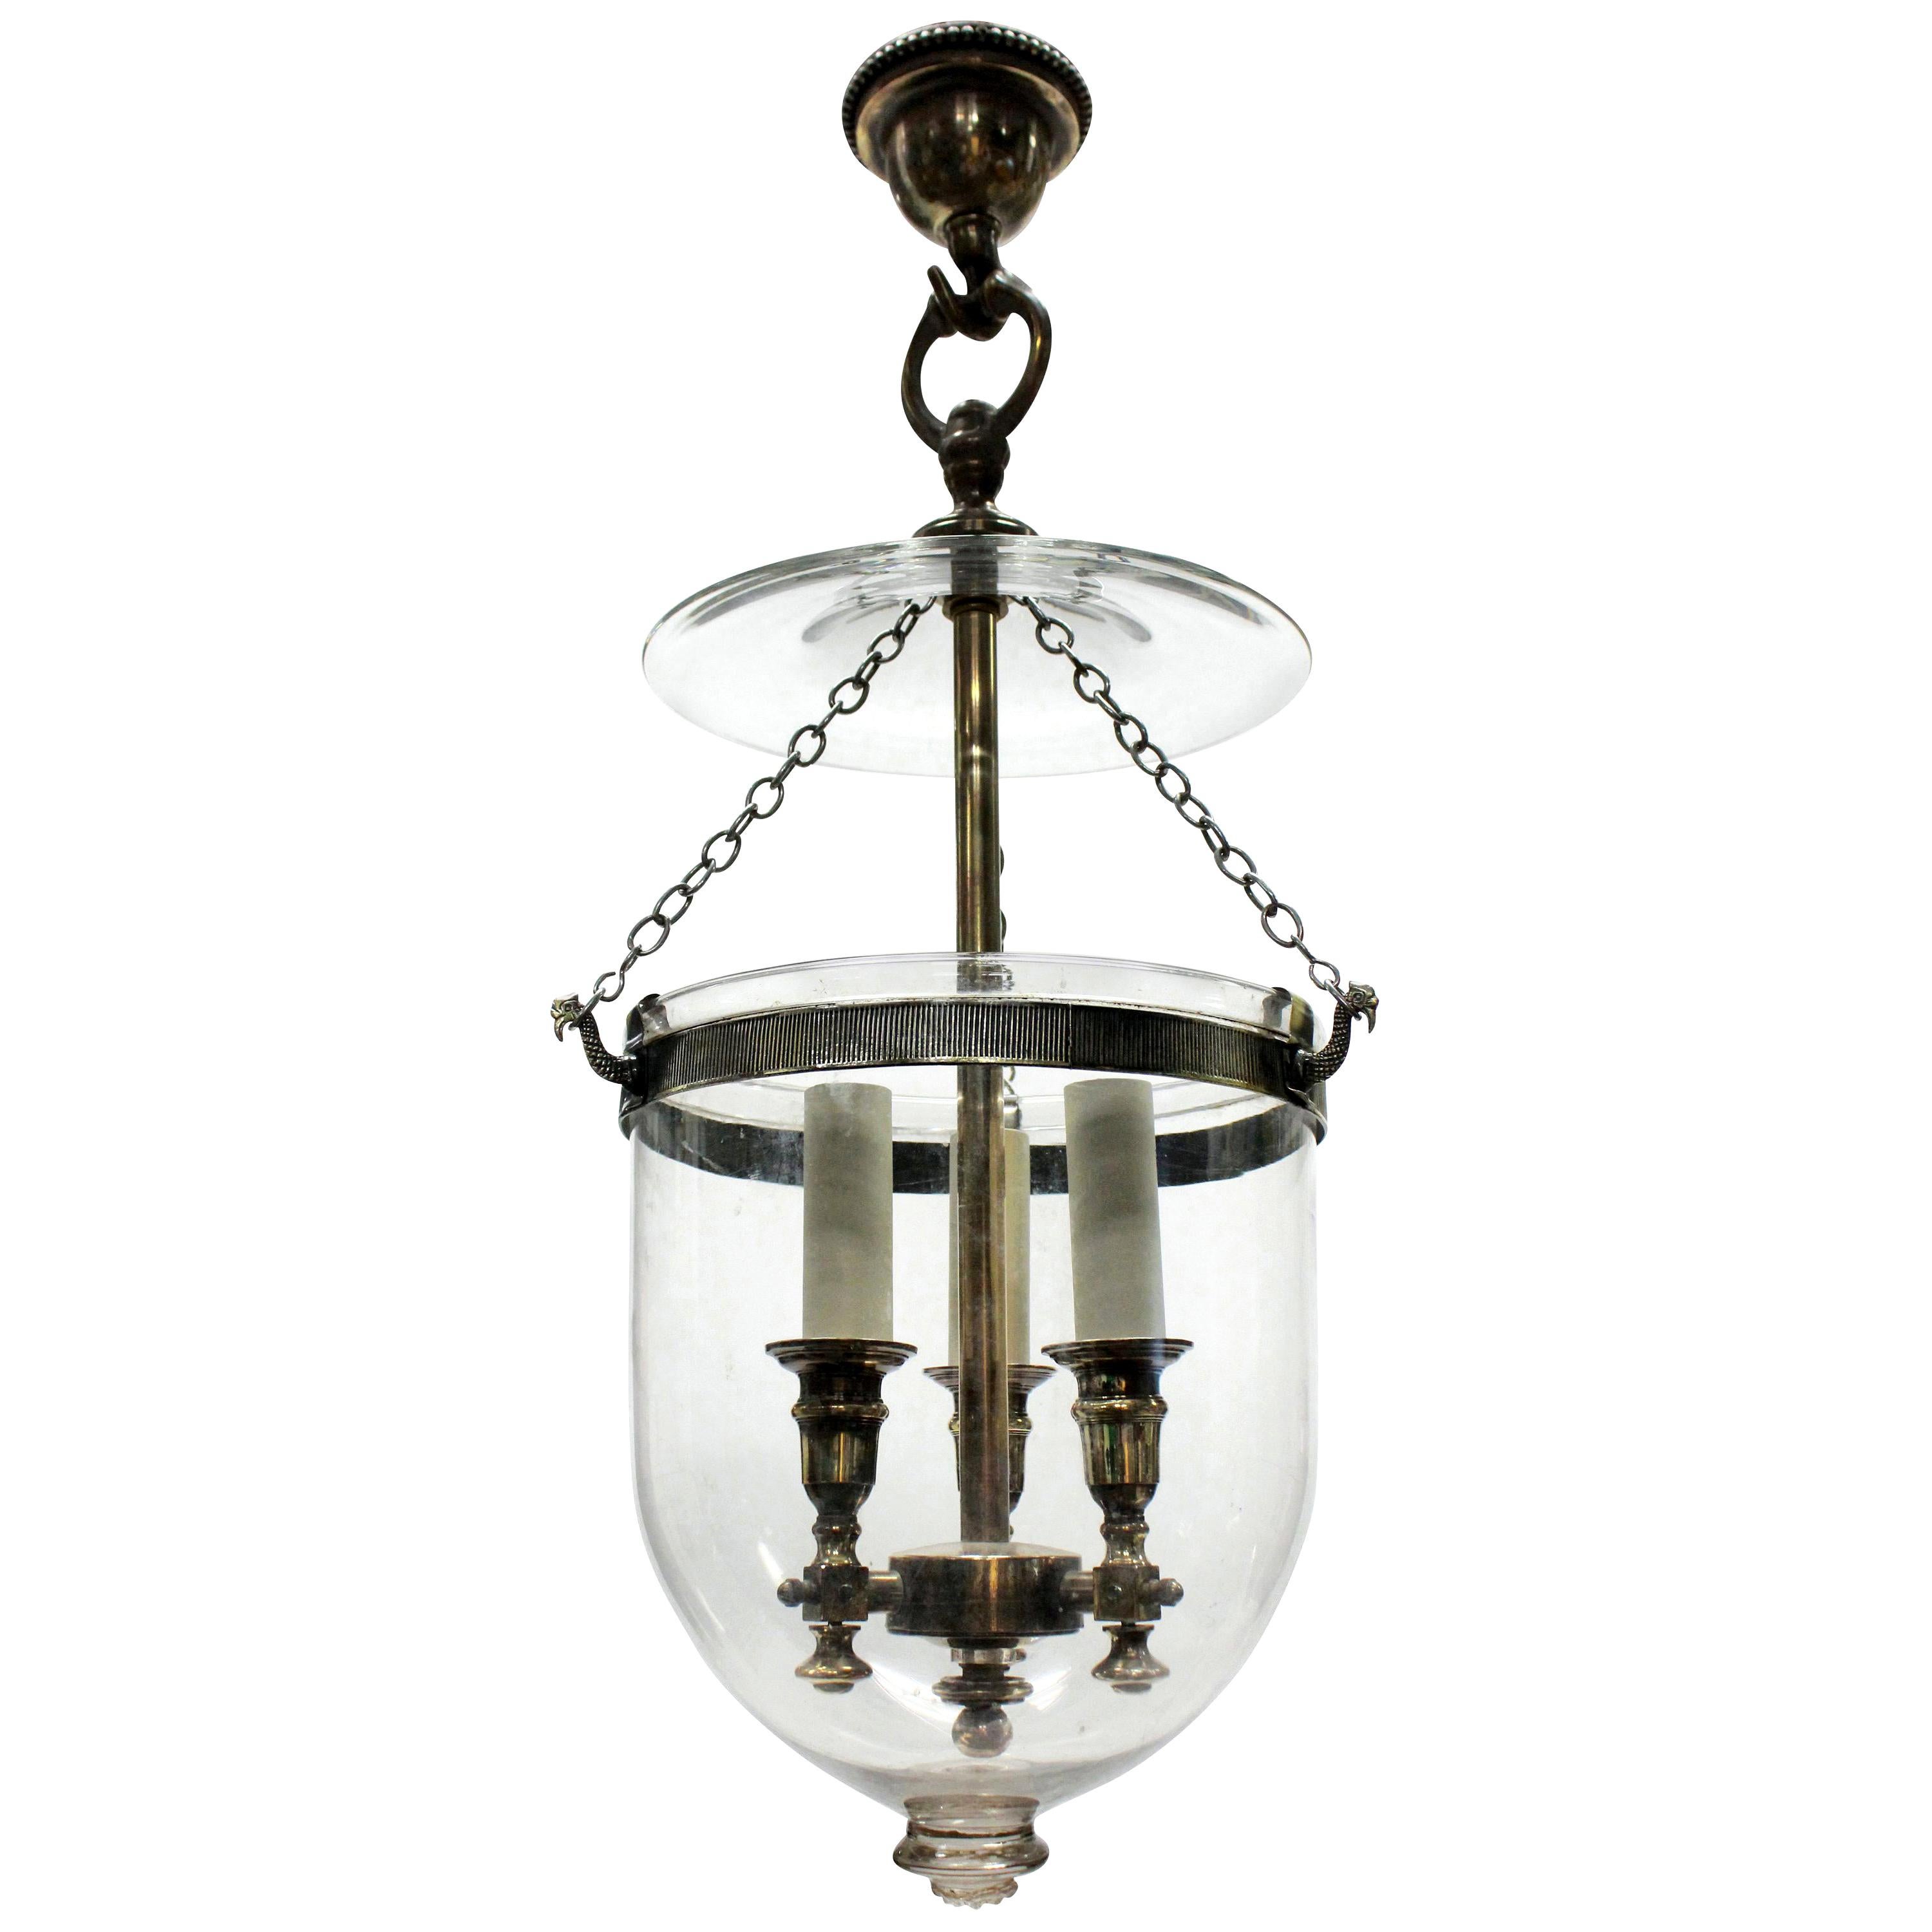 19th Century English Bell Lantern